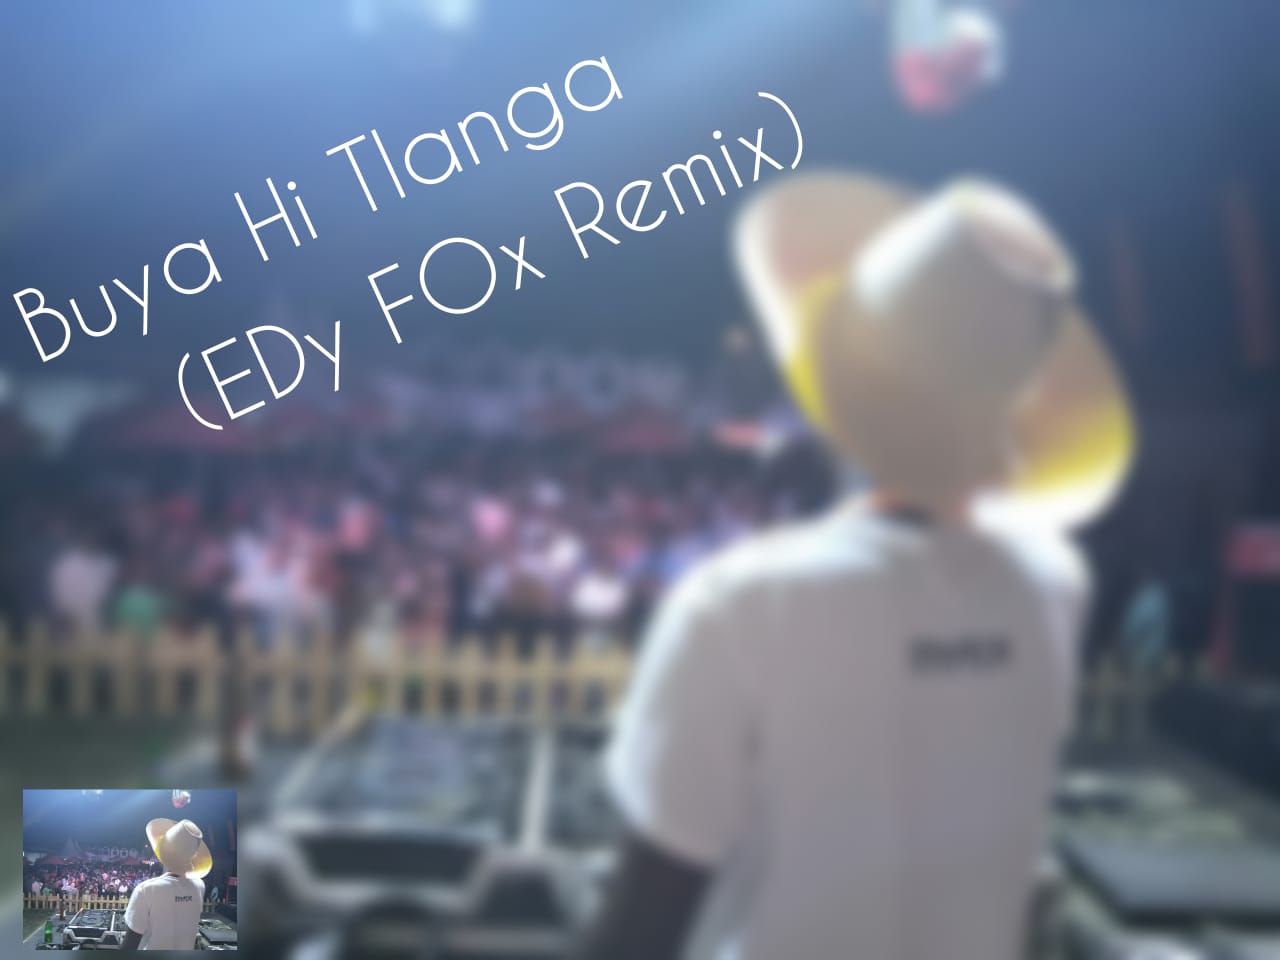 EDy FOx  – Buya Hi Tlanga (Remix)